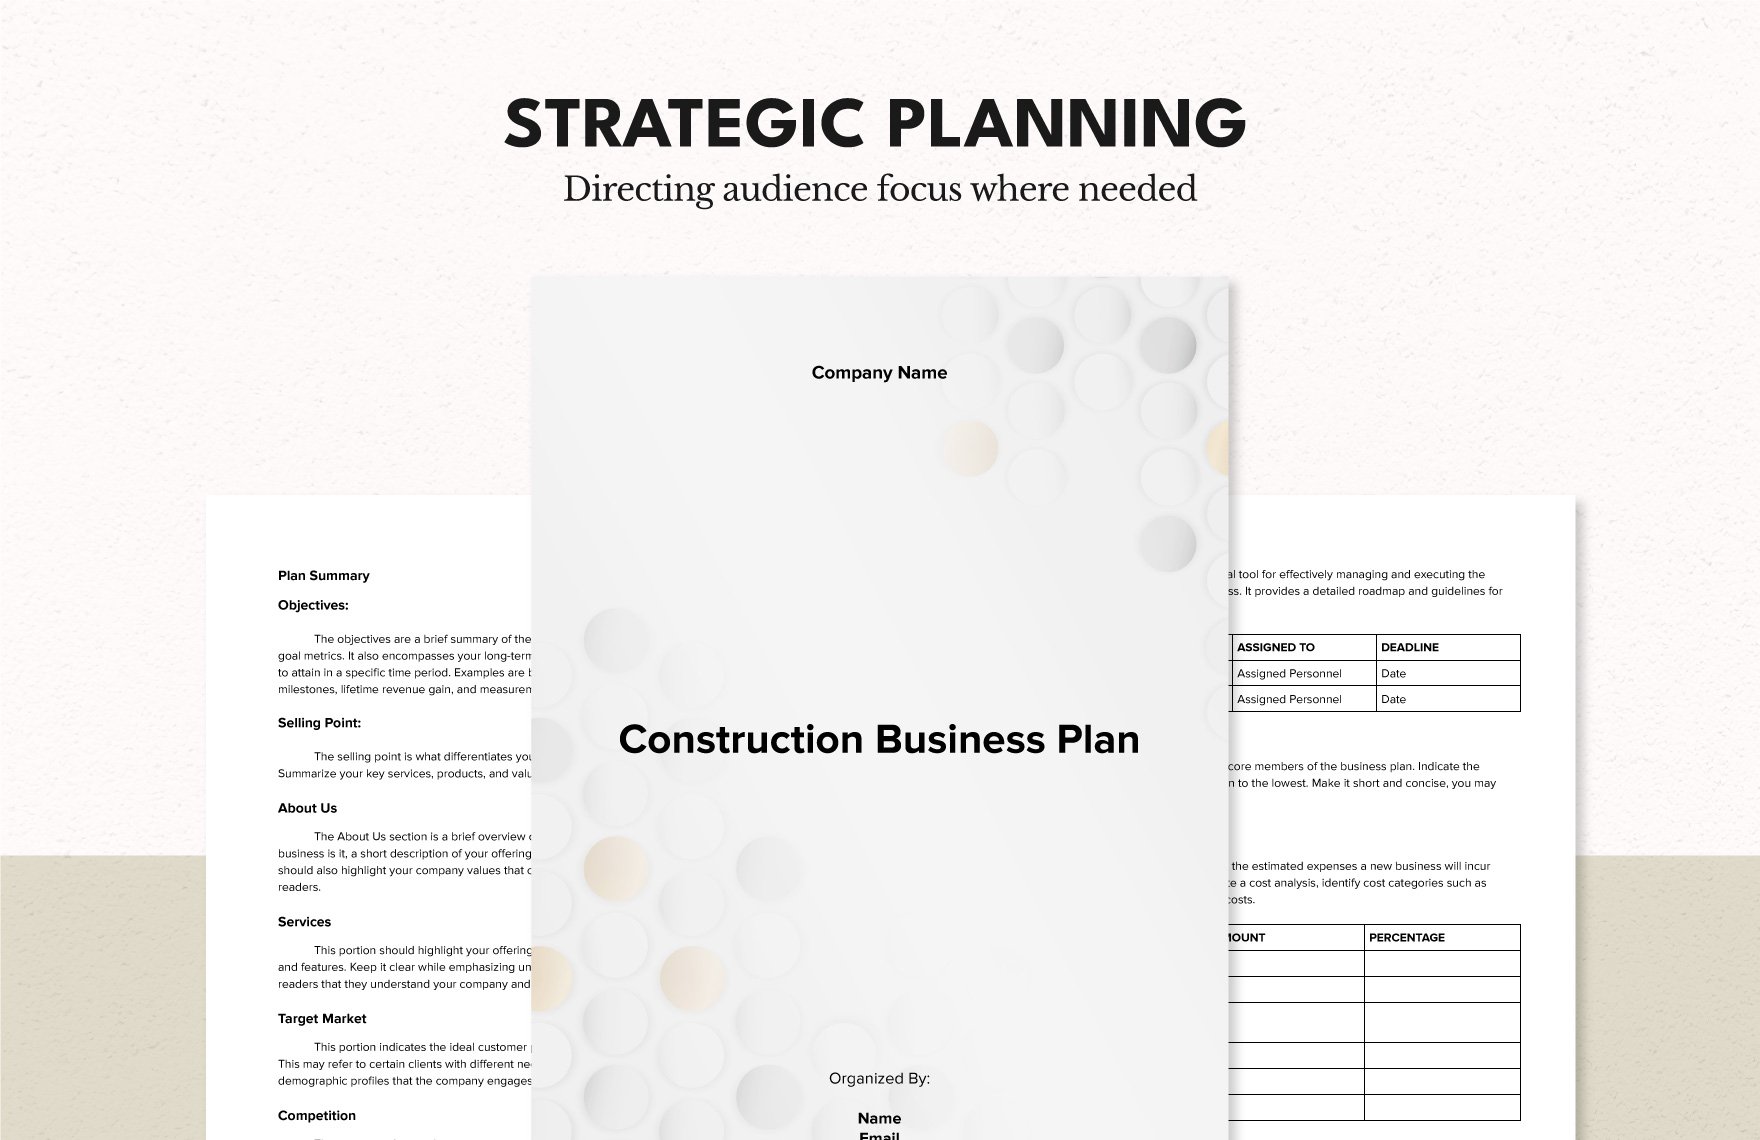 Business Plan Layout Design Template